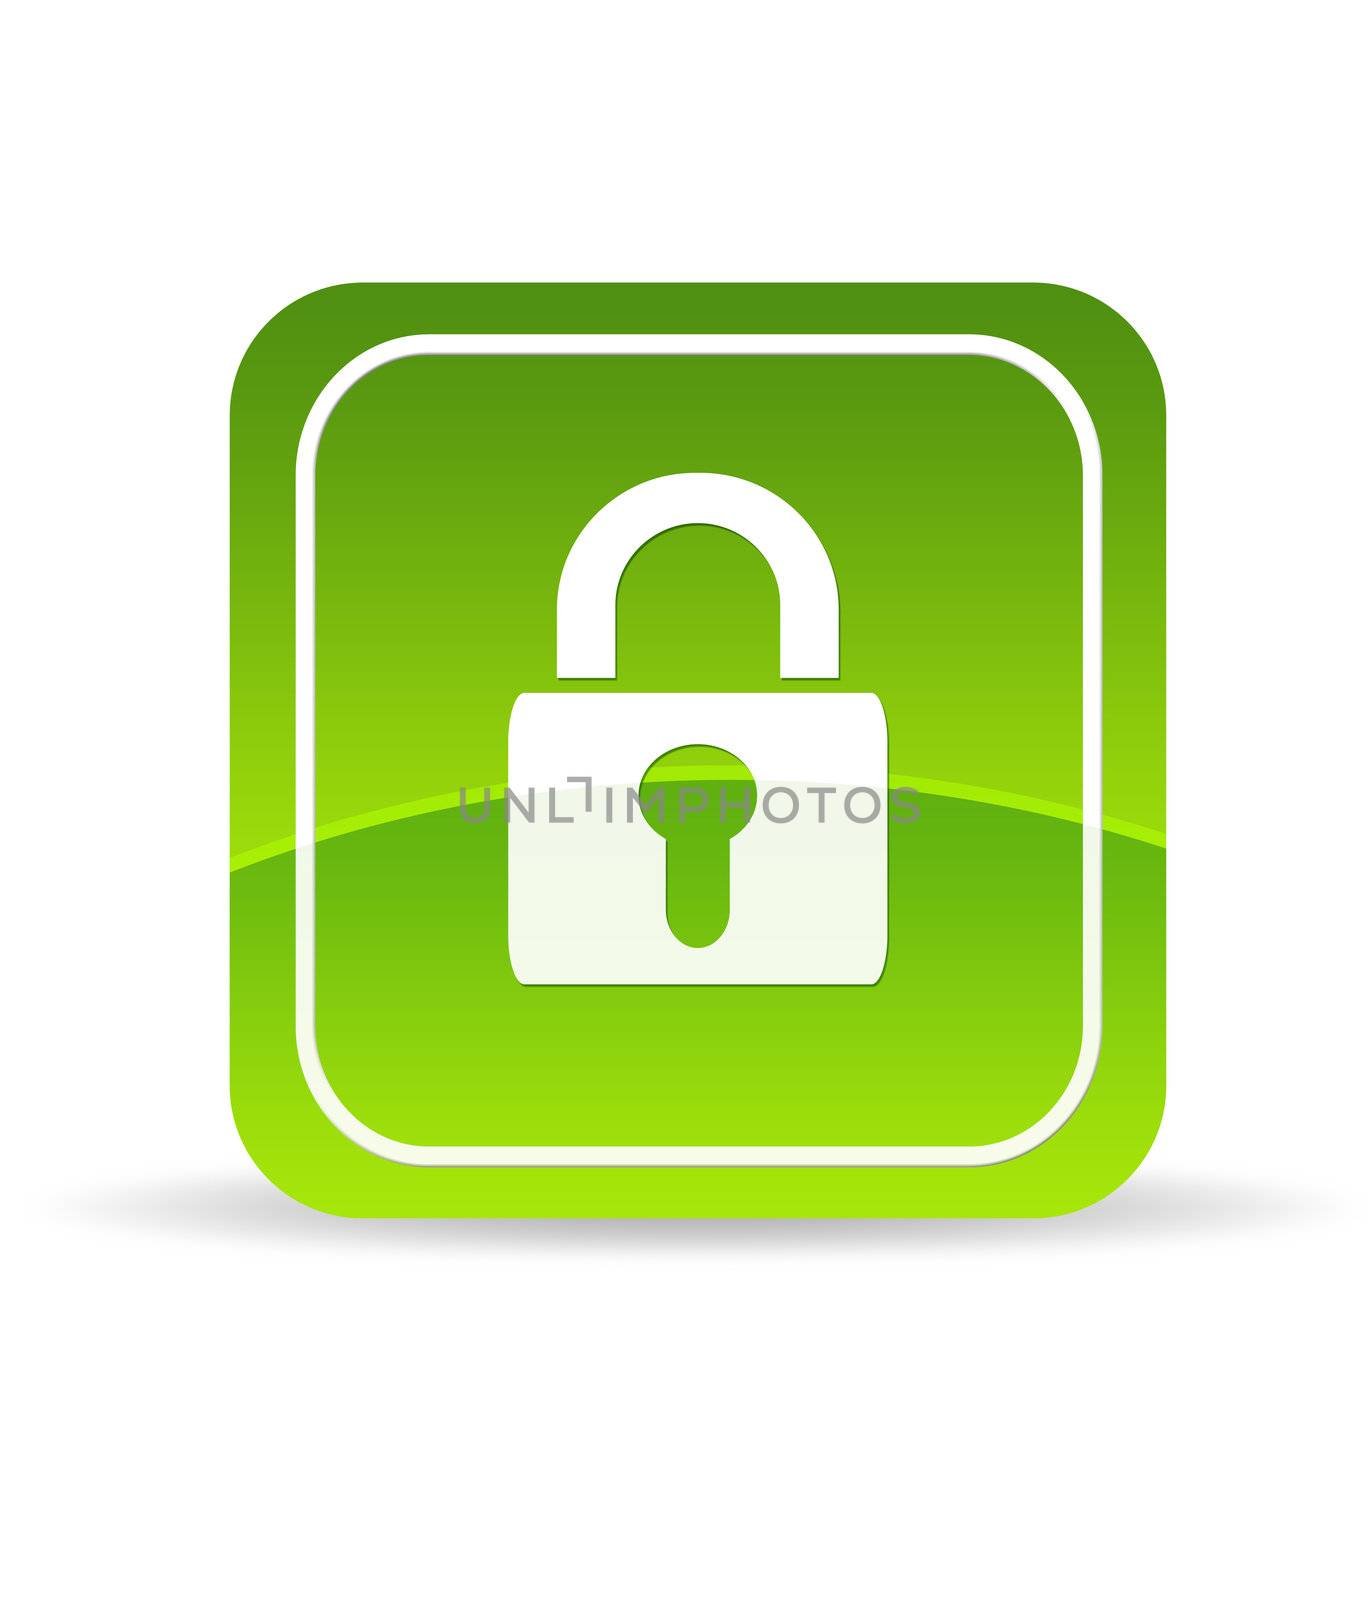 High resolution green lock icon on white background.